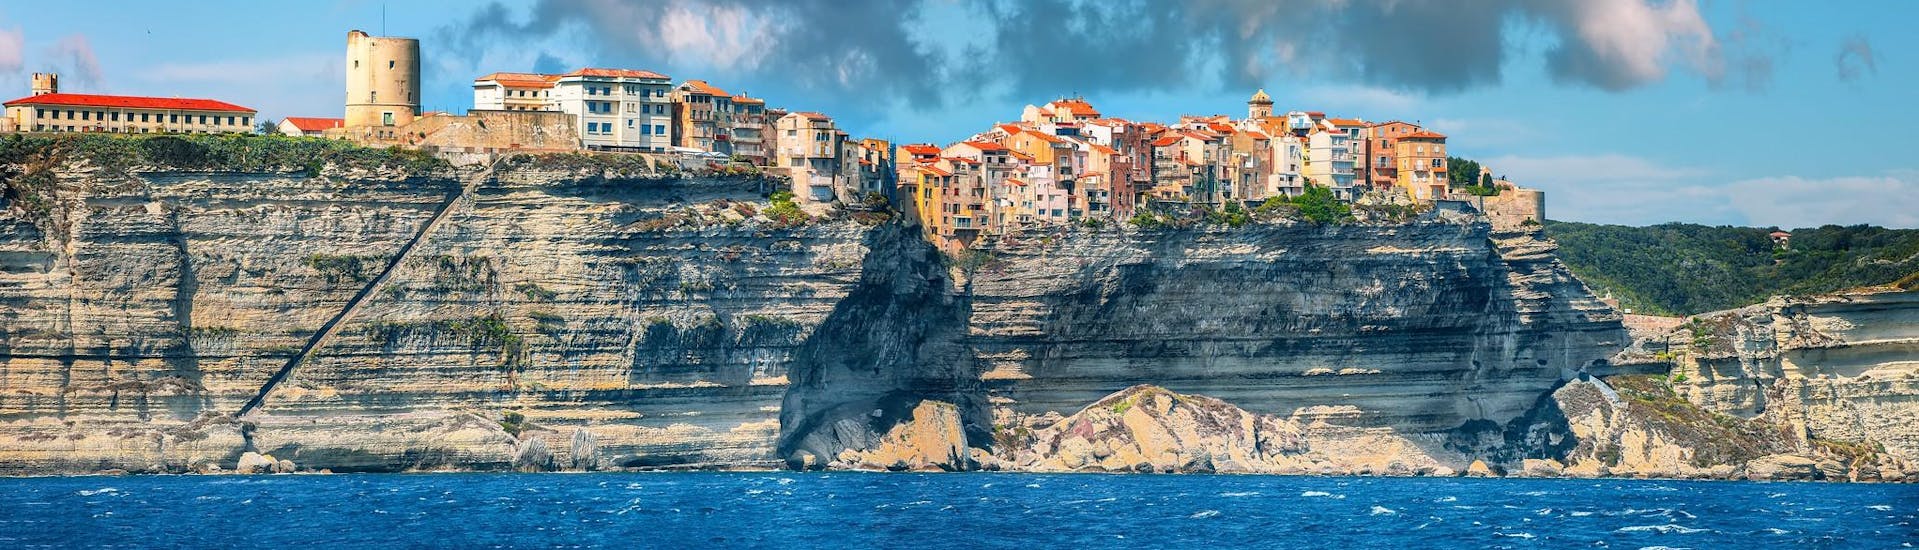 Coast and village of Bonifacio over the cliff during a boat trip to Bonifacio.